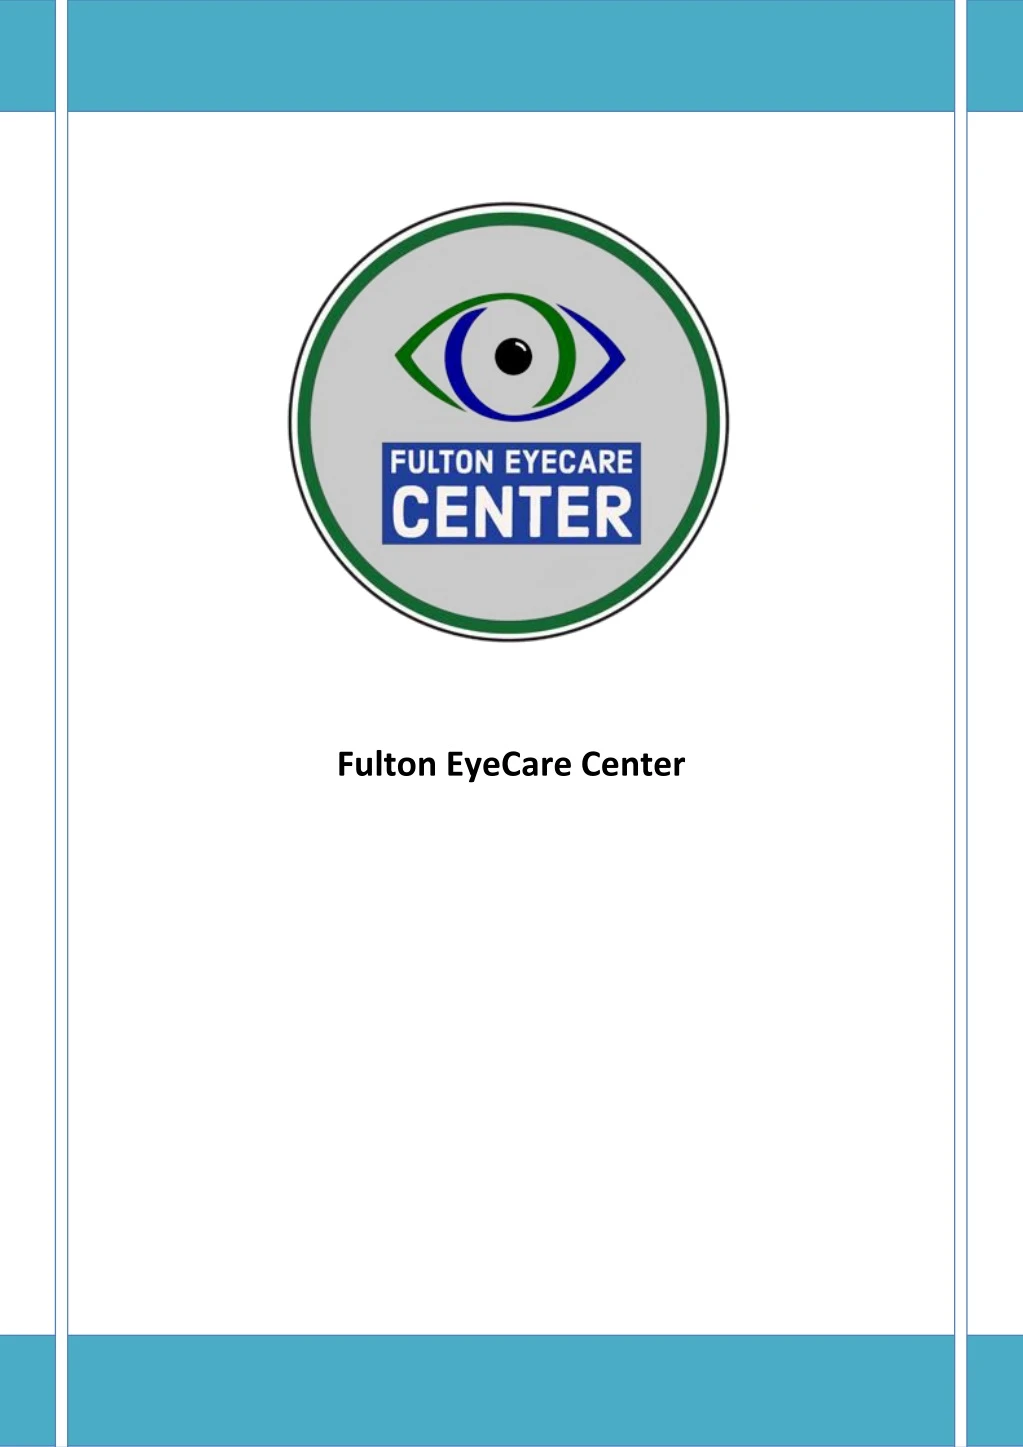 fulton eyecare center